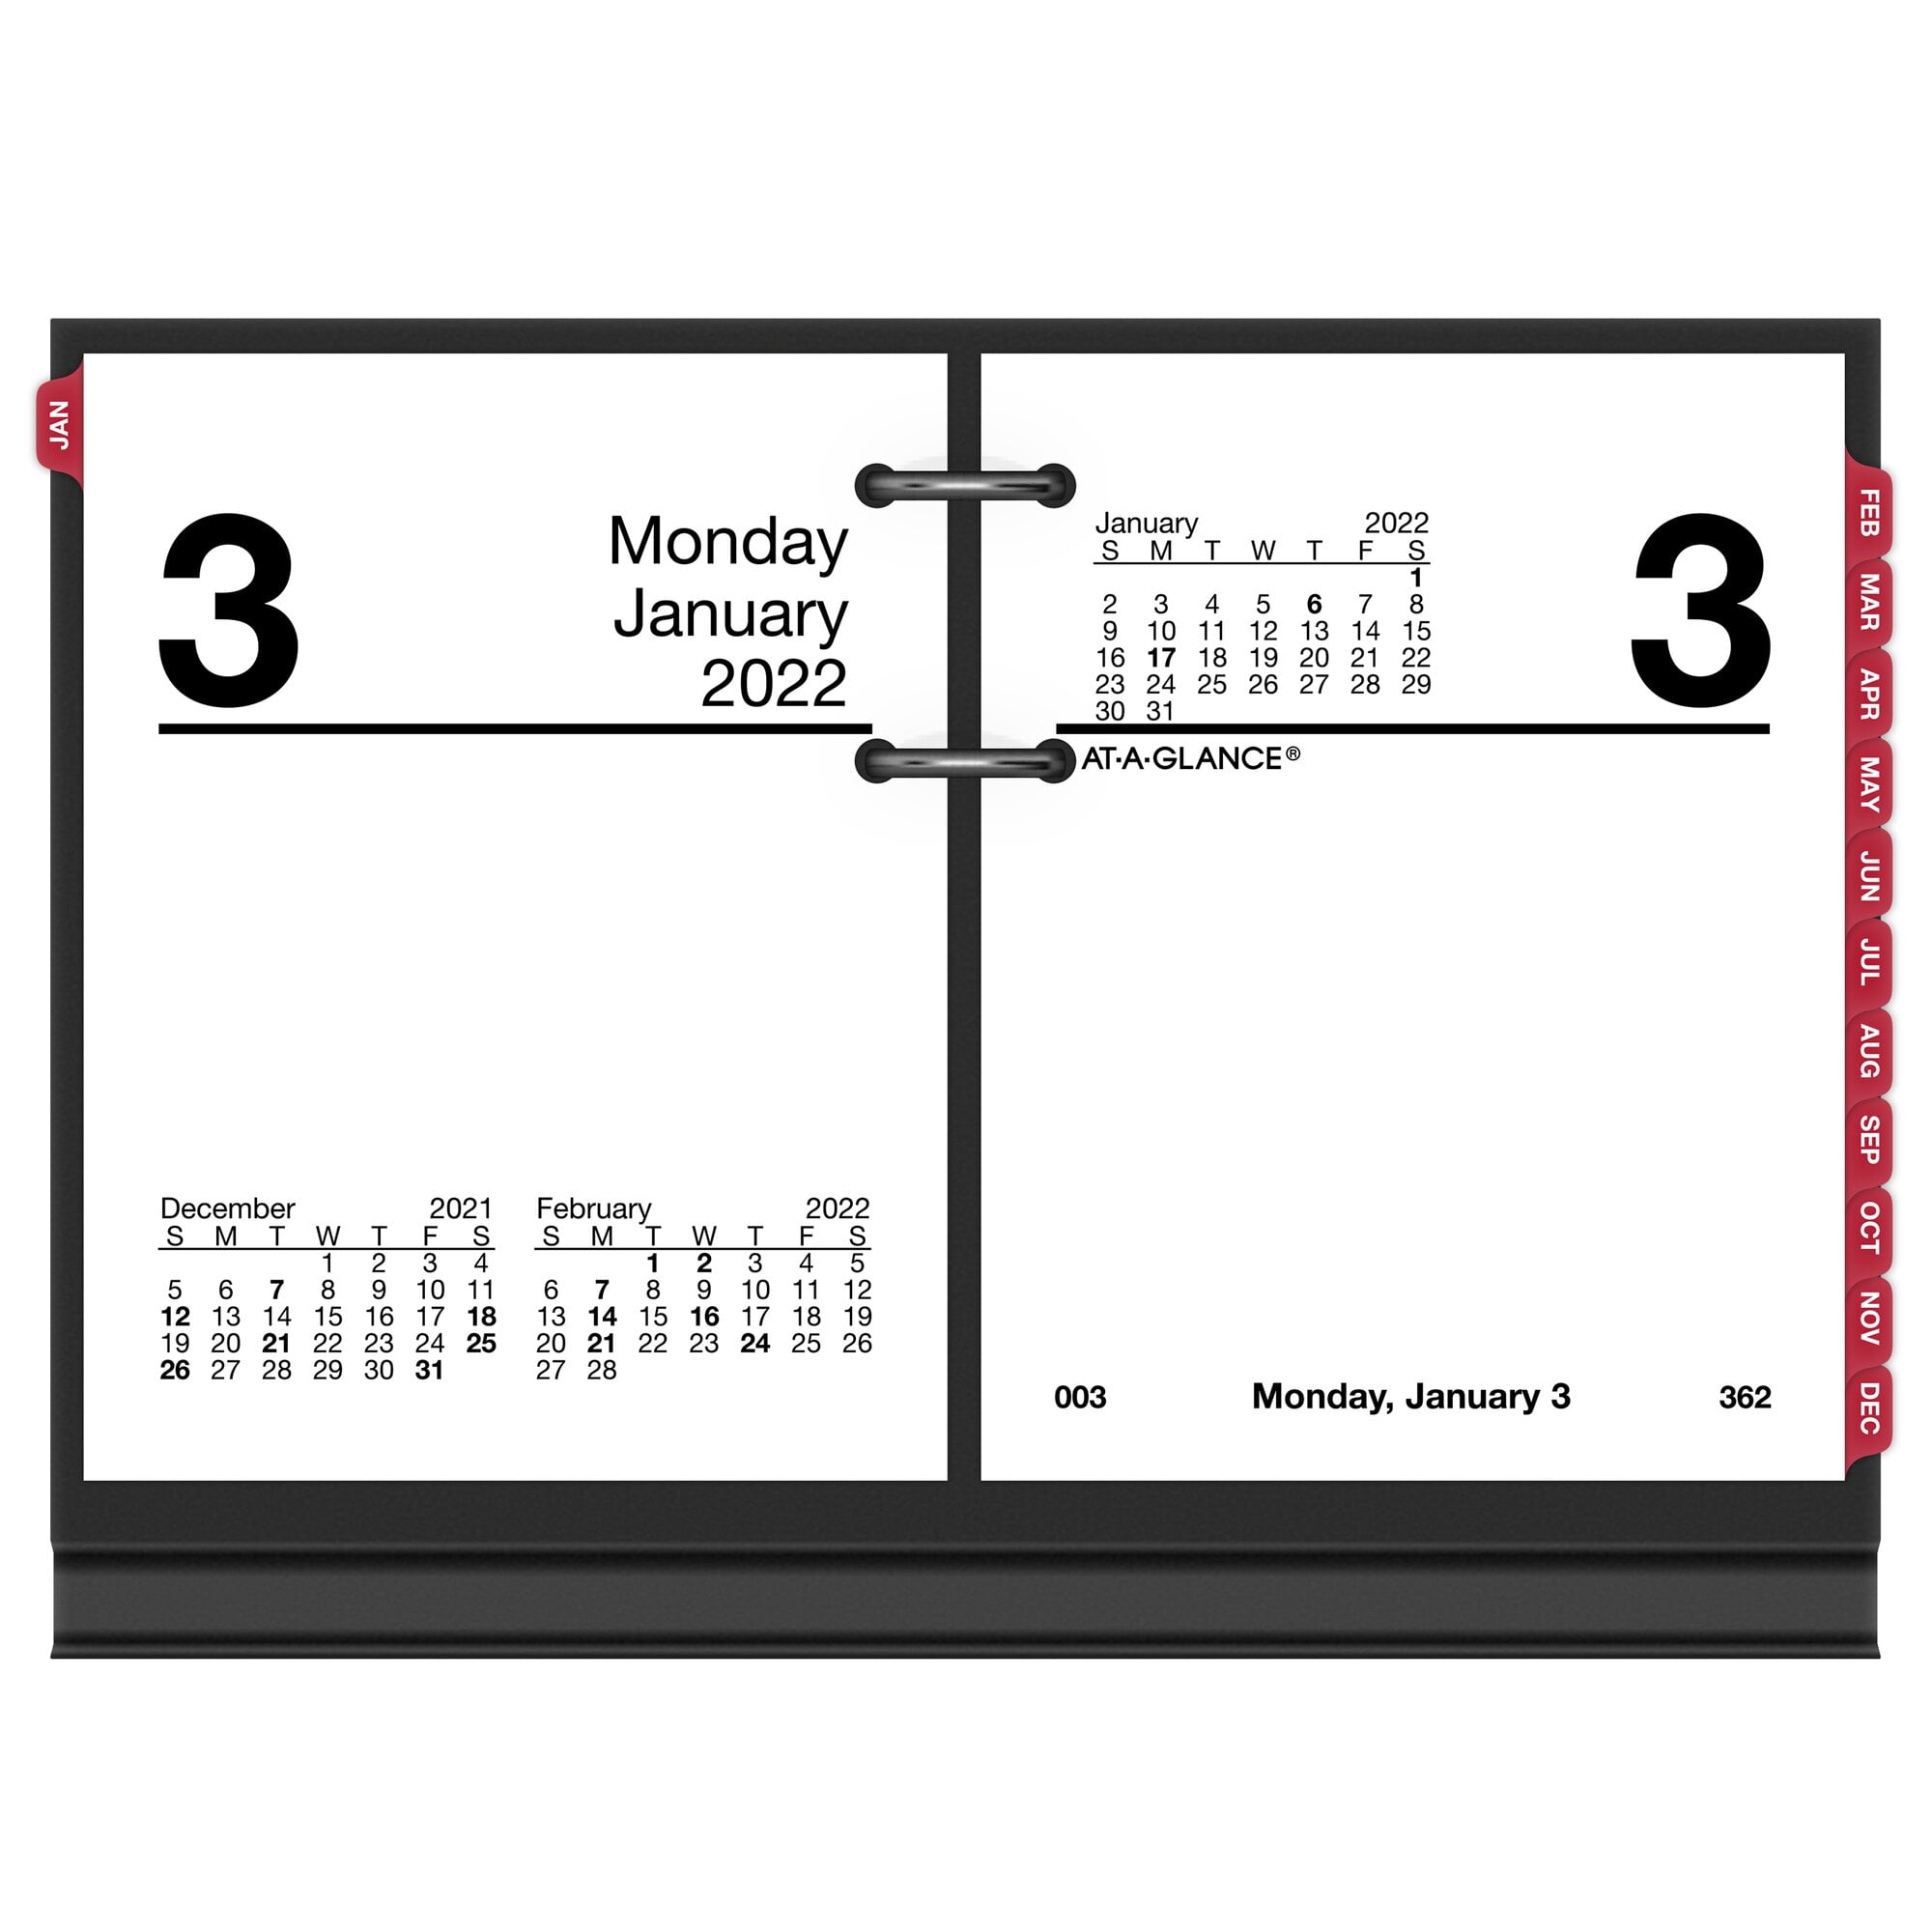 Basis Goodyear Calendar 20222023 January Calendar 2022